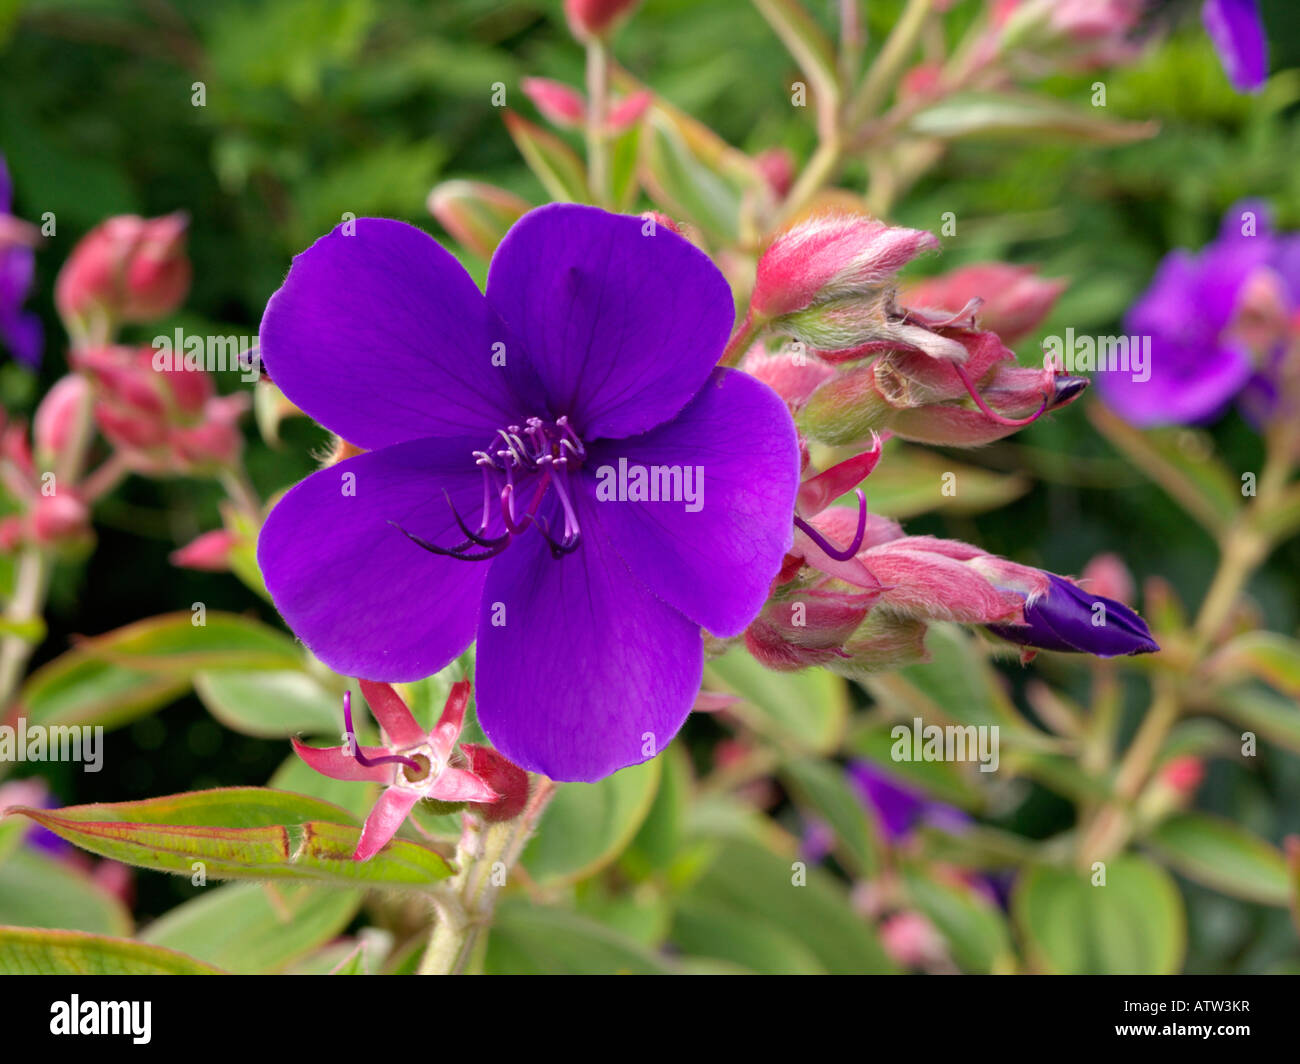 Princess flower (Tibouchina urvilleana) Stock Photo